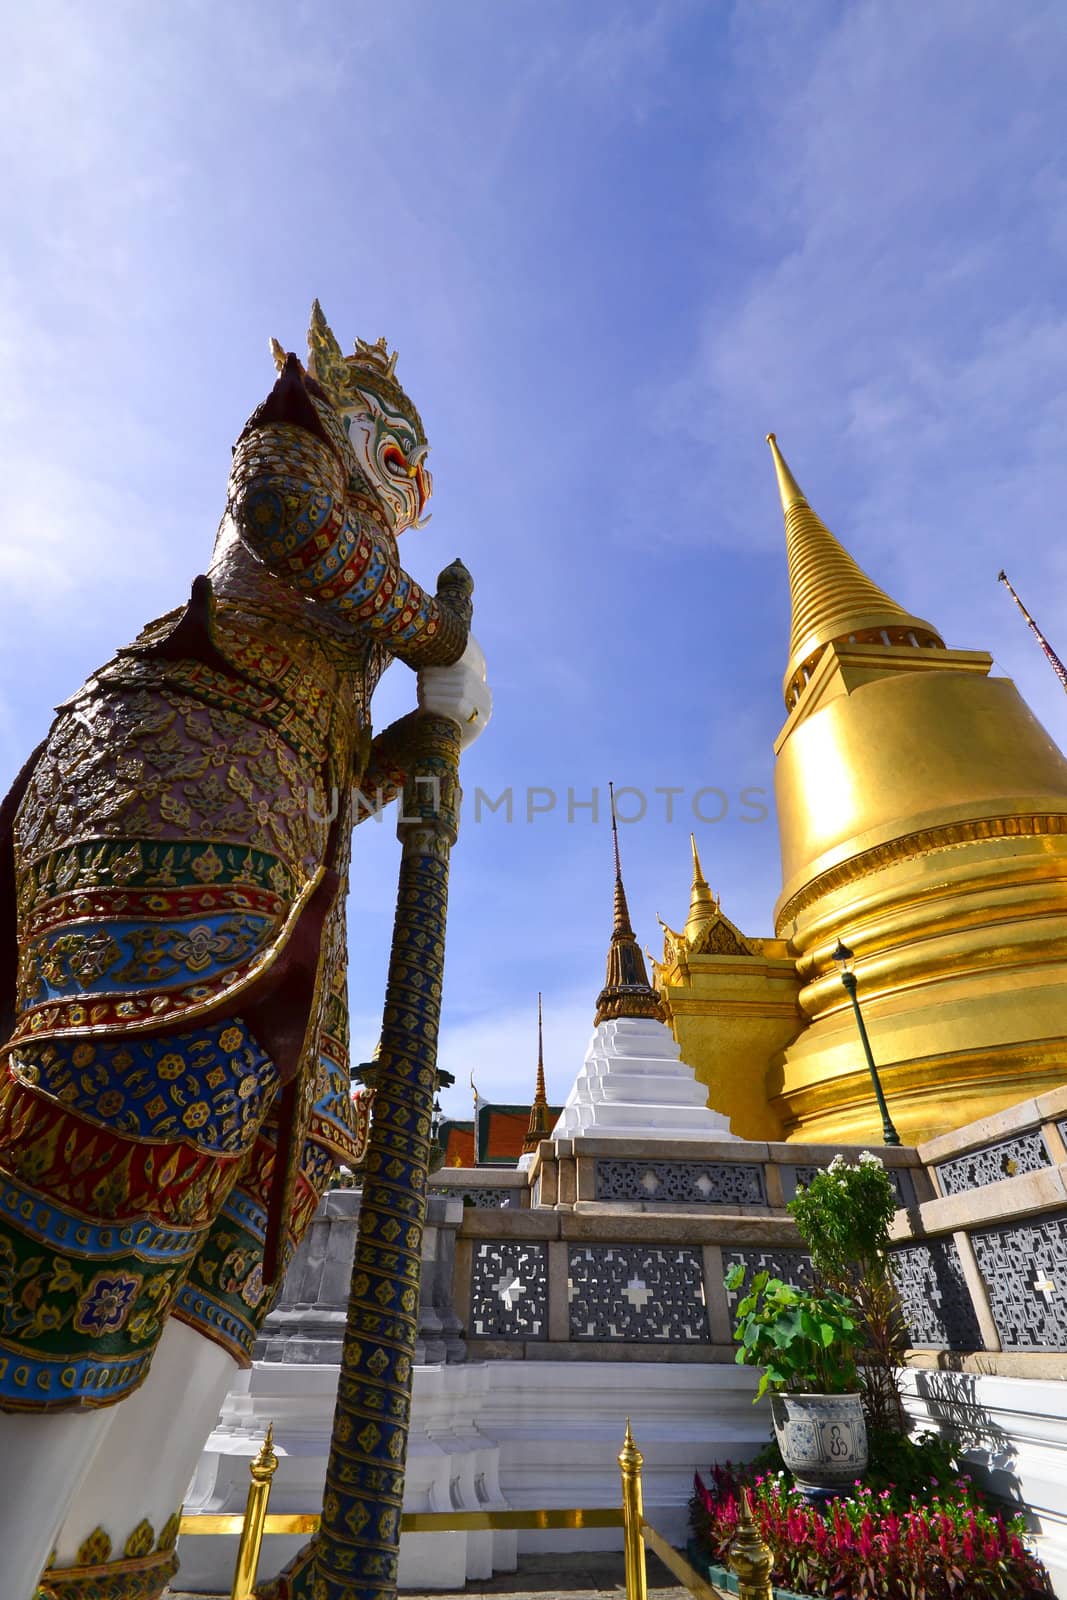  Giant sculpture inWat Phra Kaew ,thailand by myibean